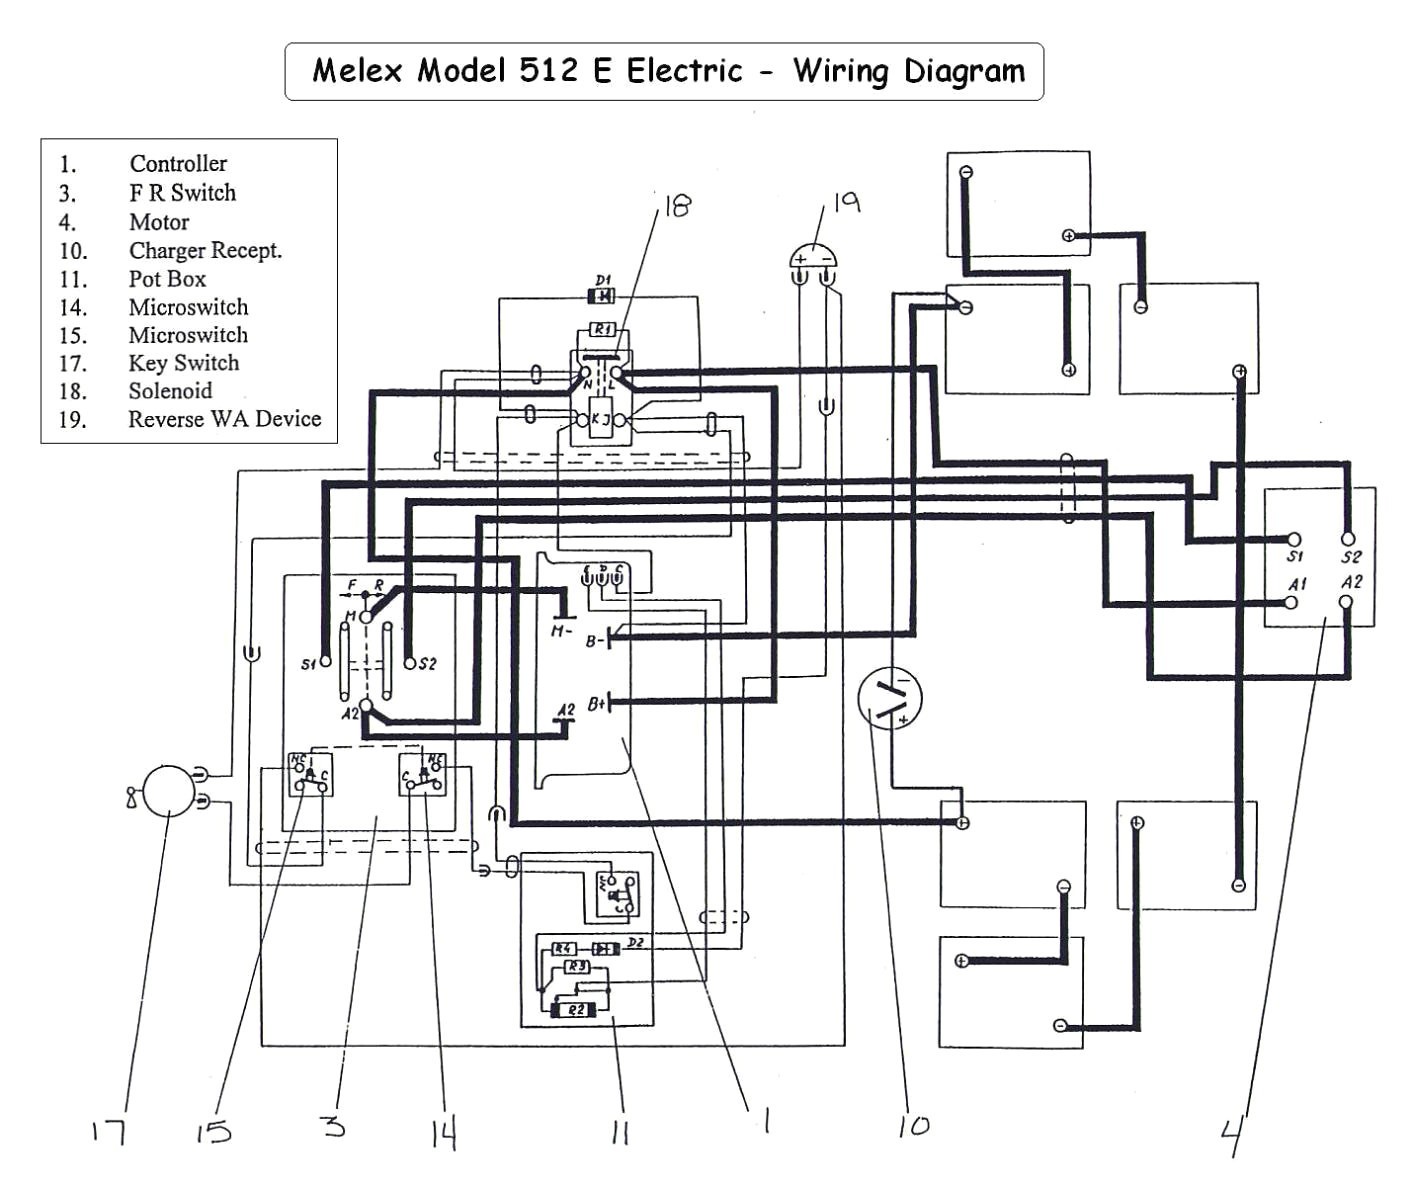 yamaha g16 golf cart wiring diagram mastertopforum me showy g16e rh wellread me 1996 Ezgo Golf Cart Wiring Diagram 1996 Ezgo Golf Cart Wiring Diagram